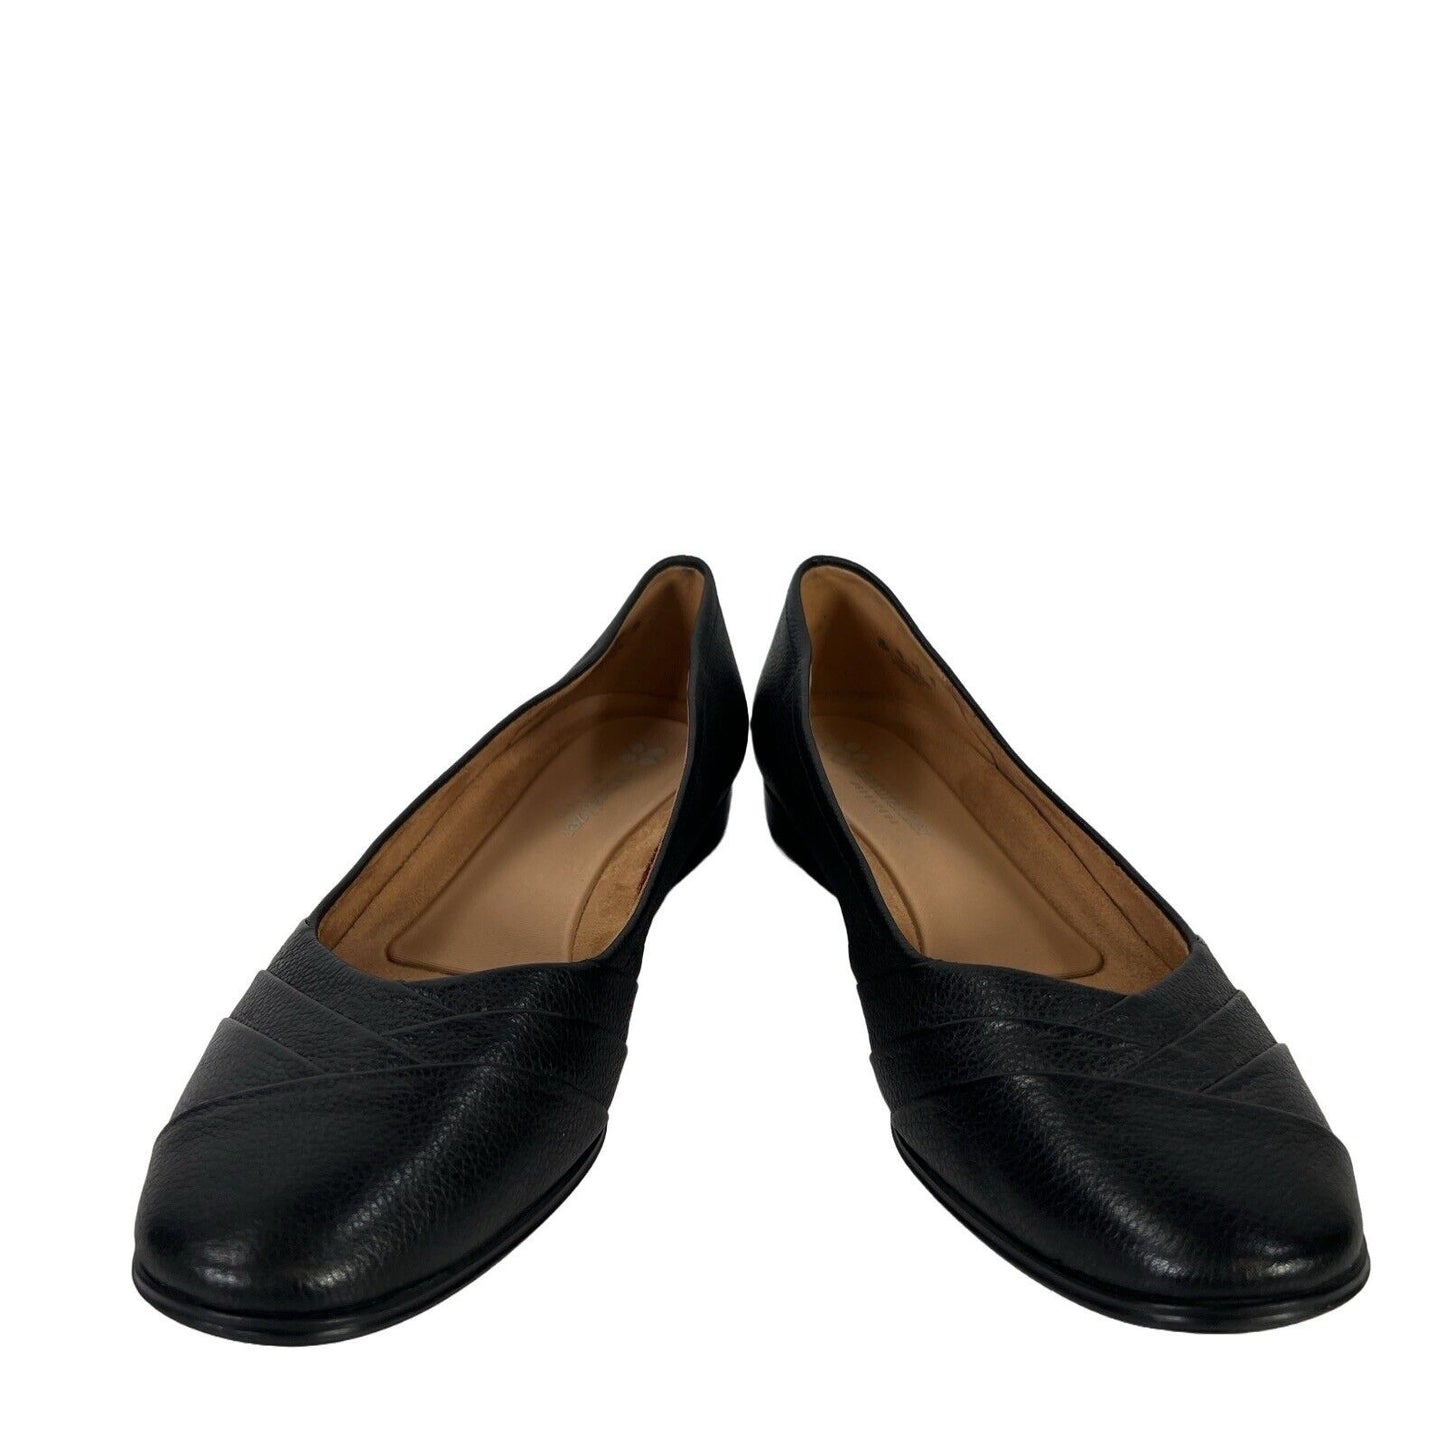 Naturalizer Women's Black N5 Contour Leather Ballet Flats - 10 Narrow